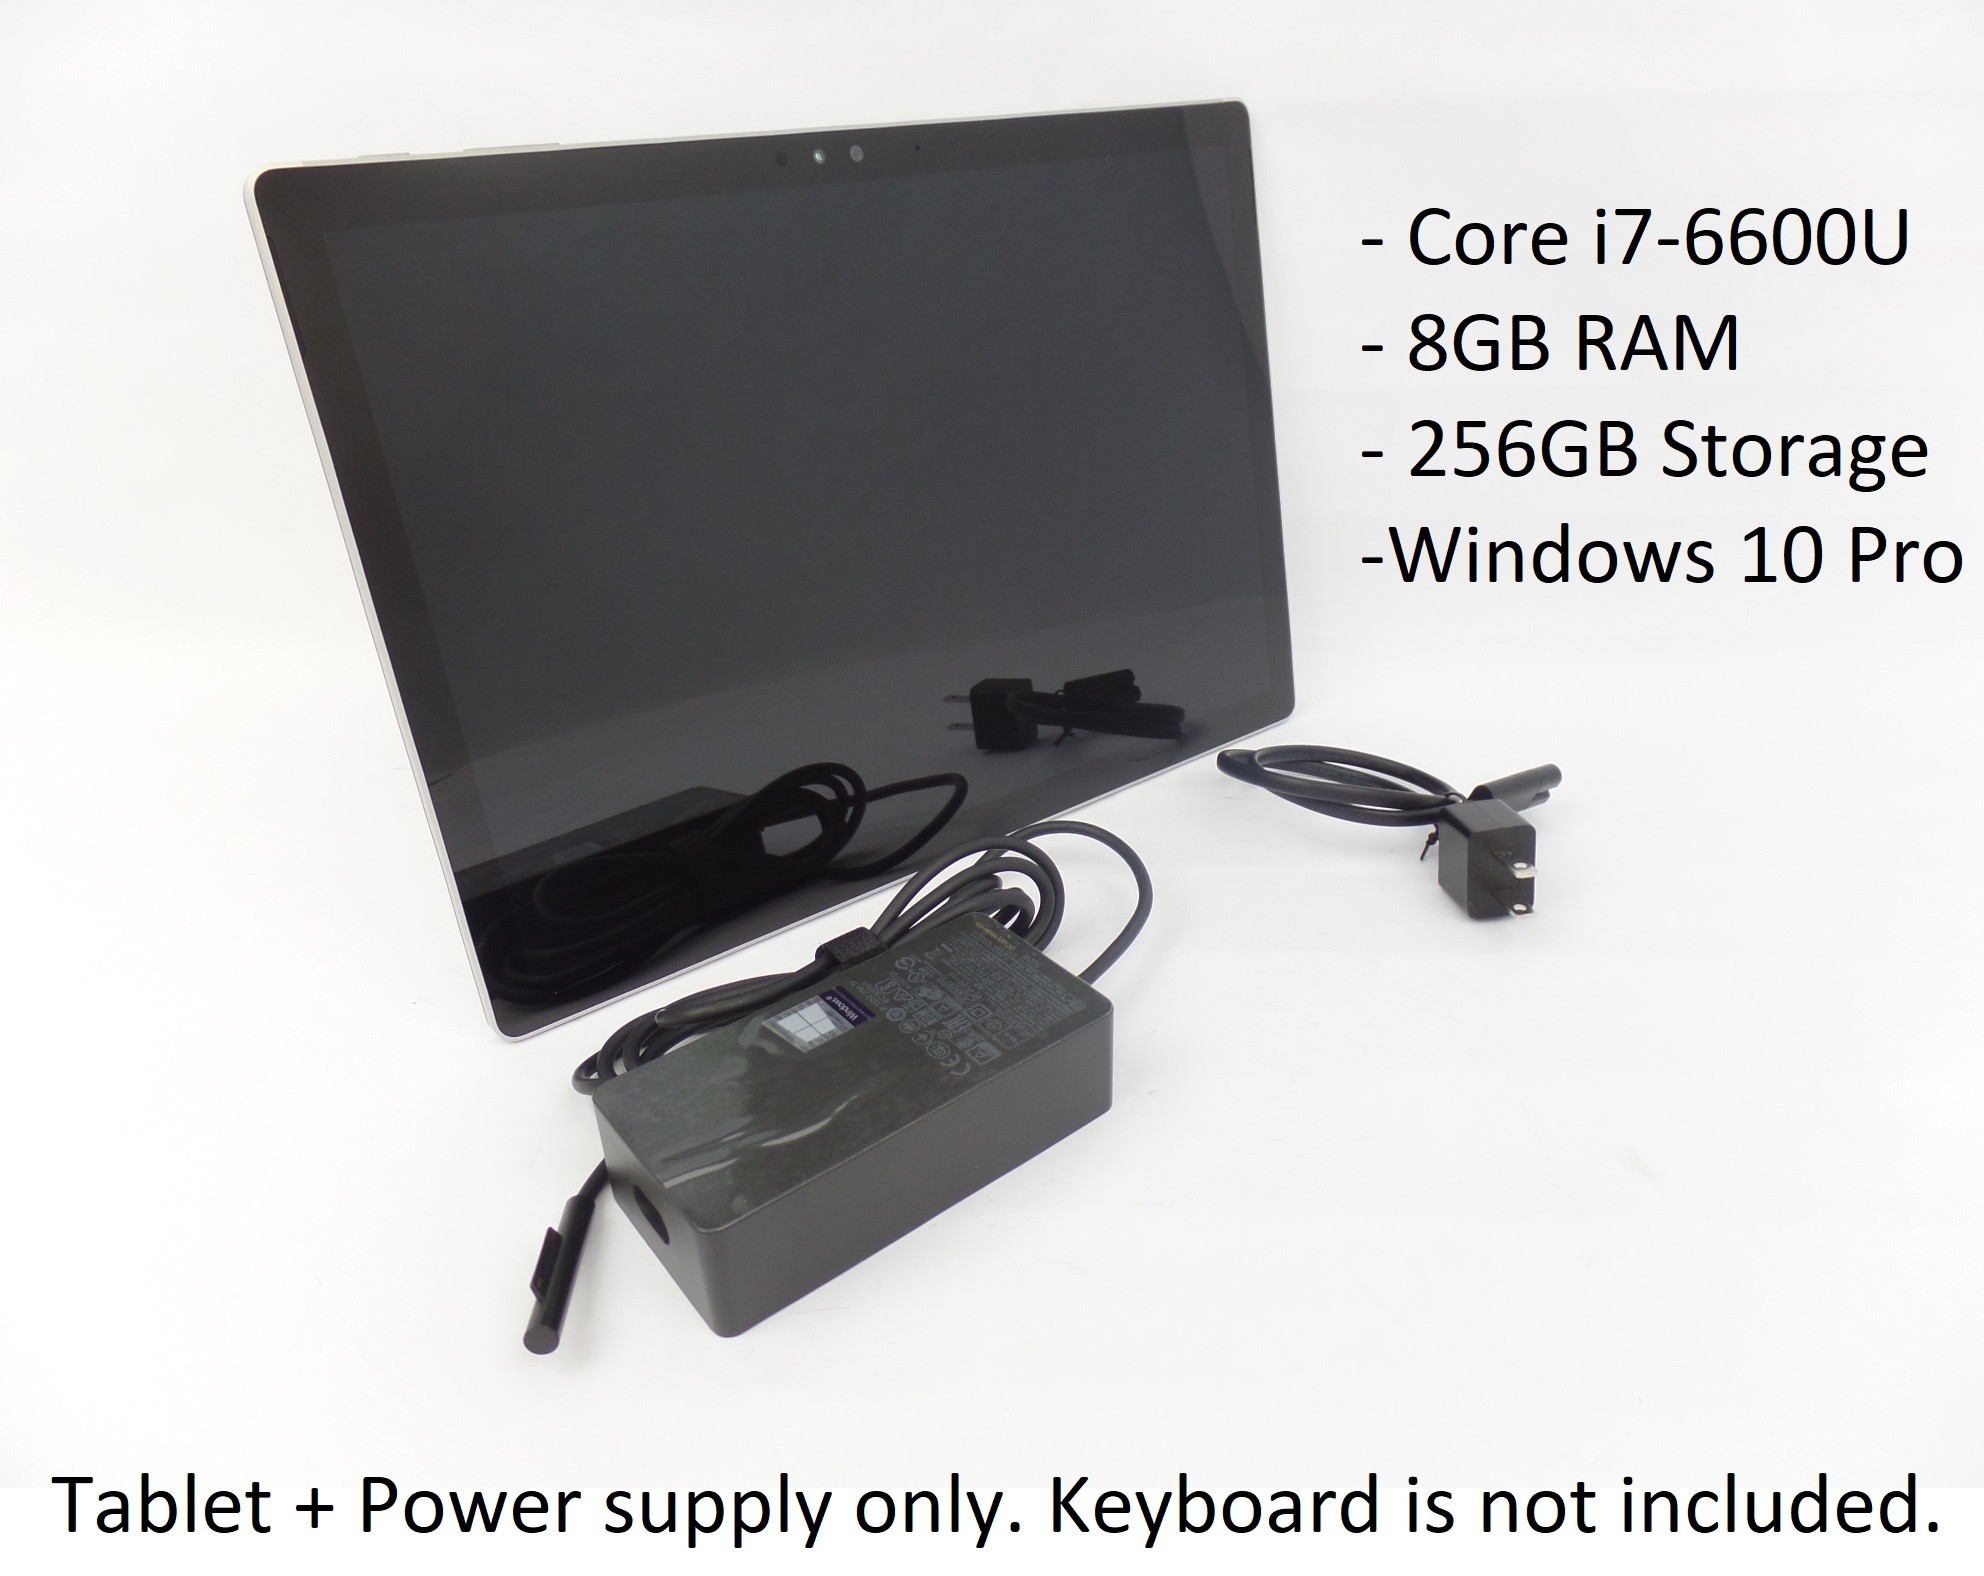 Microsoft Surface Book 1703 13.5" i7-6600U 8GB 256GB W10P Tablet + Power Supply